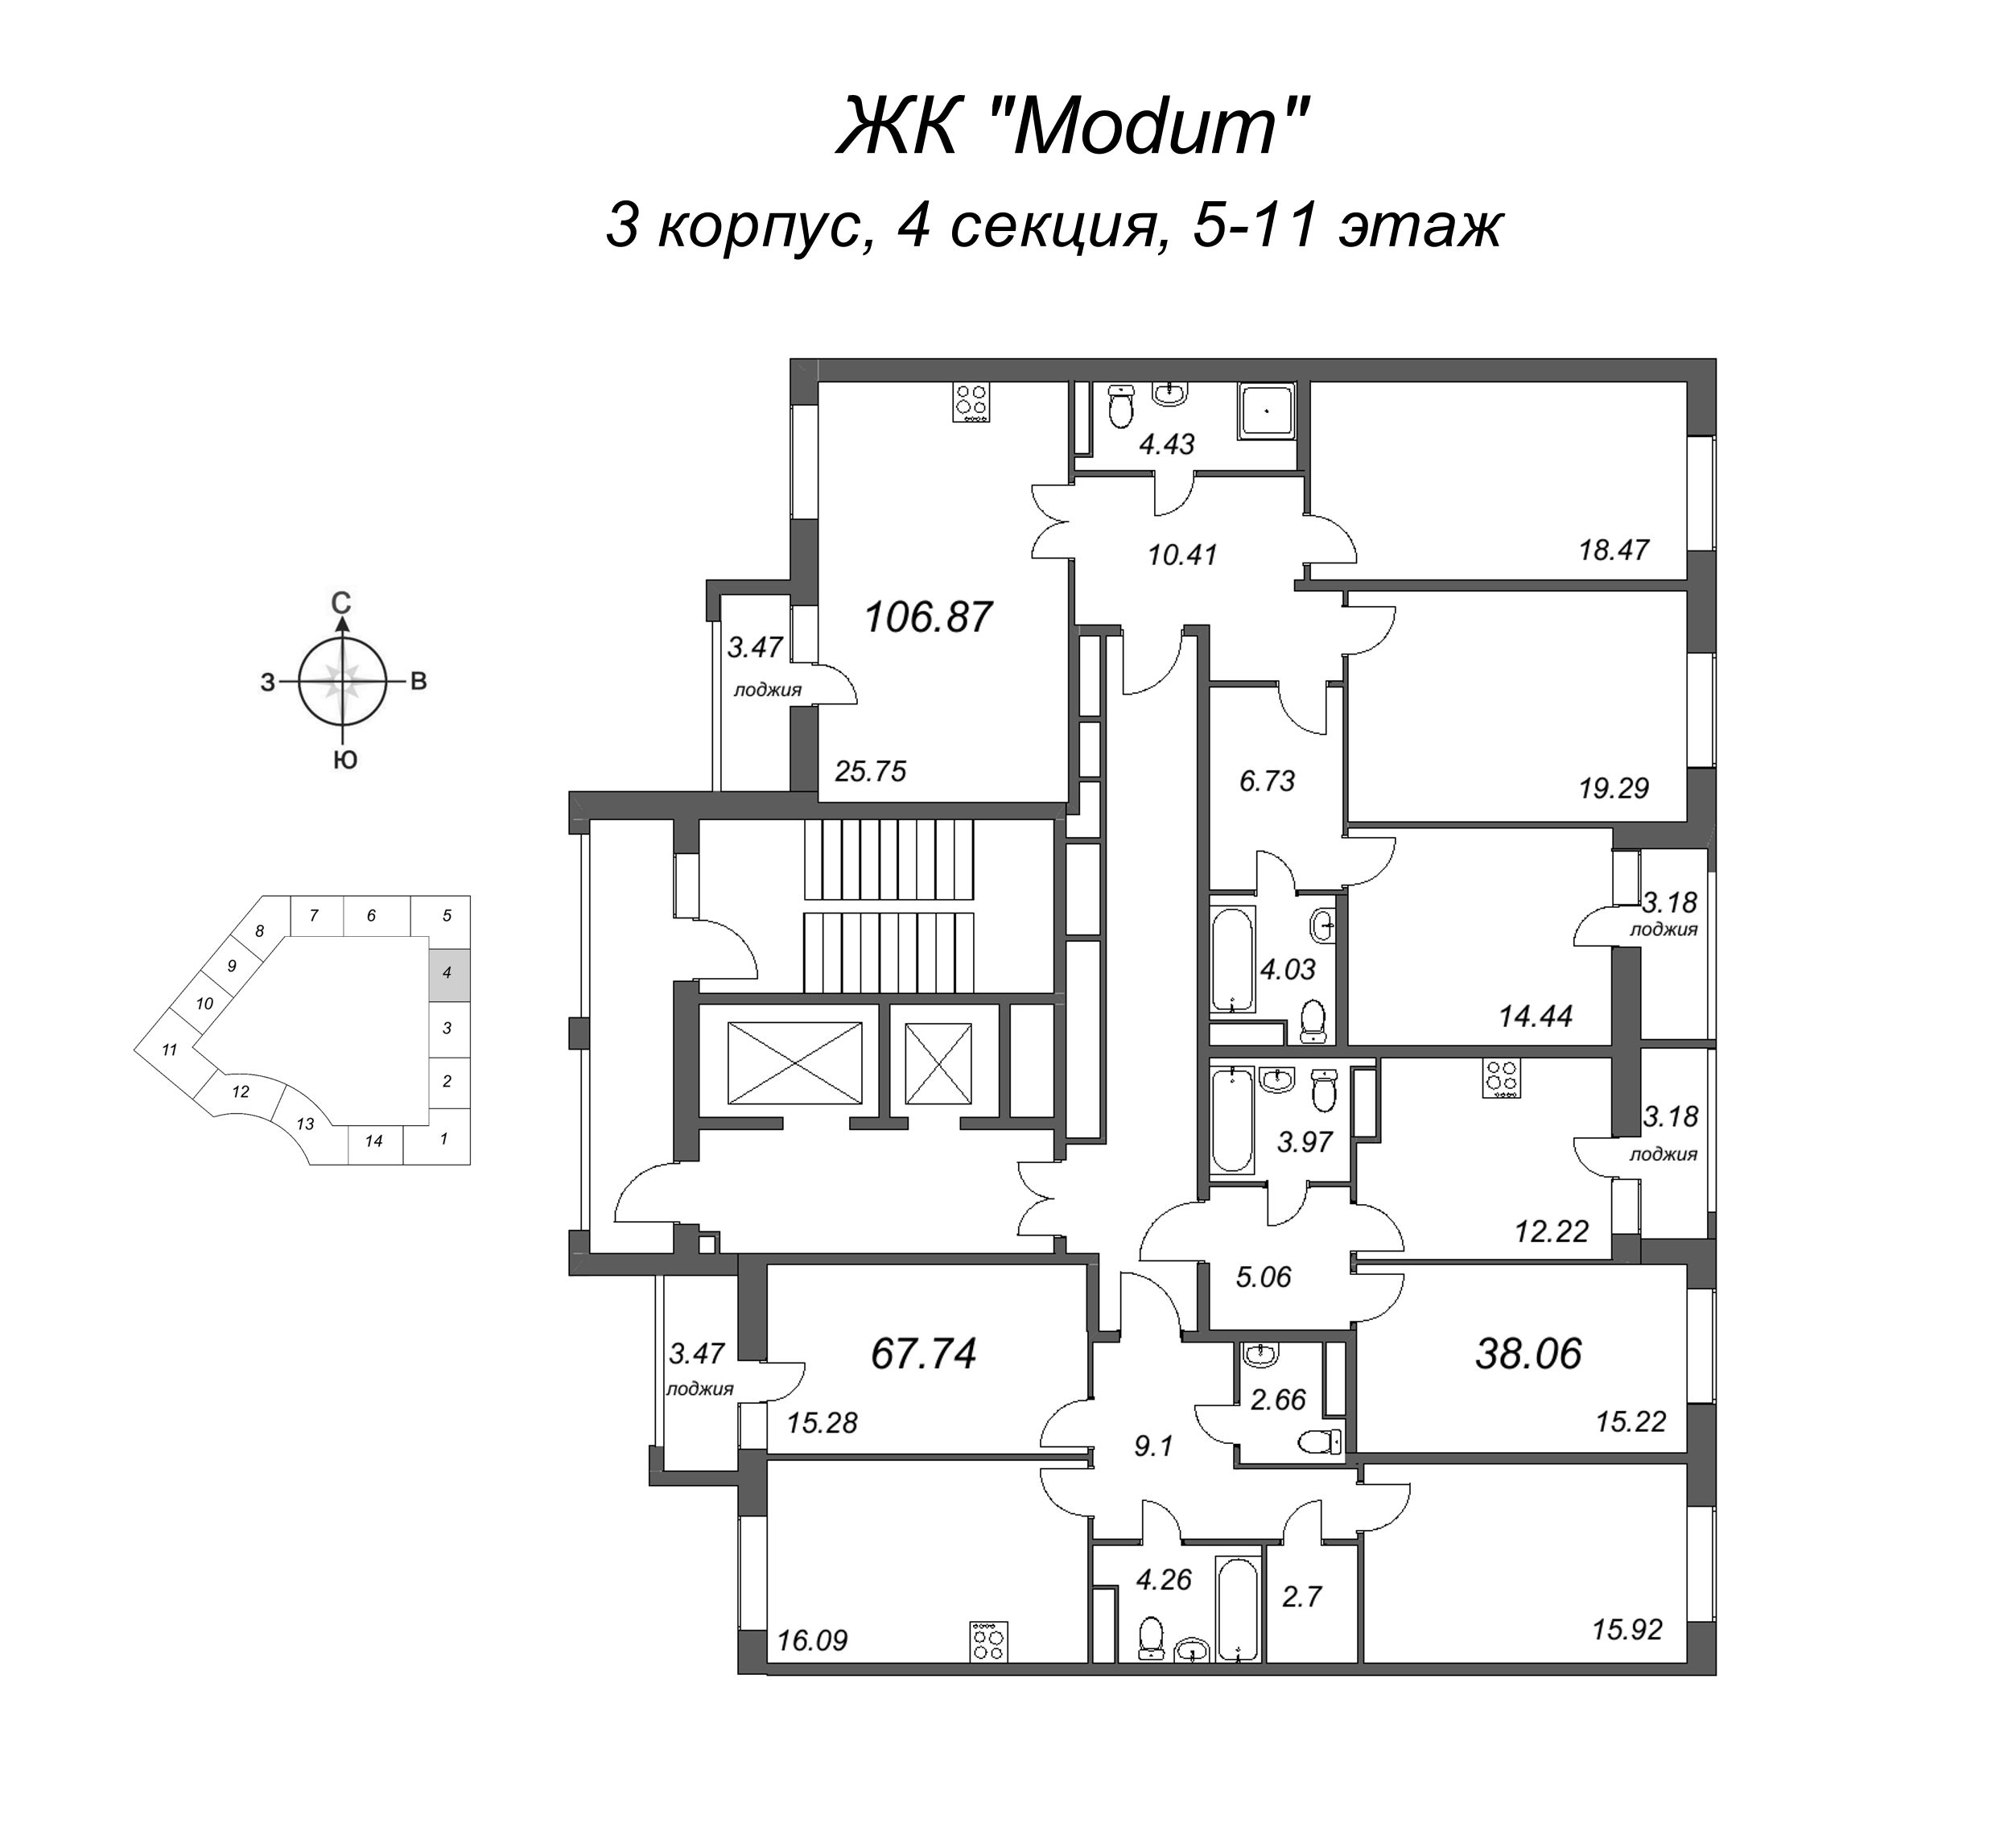 4-комнатная (Евро) квартира, 106.87 м² - планировка этажа